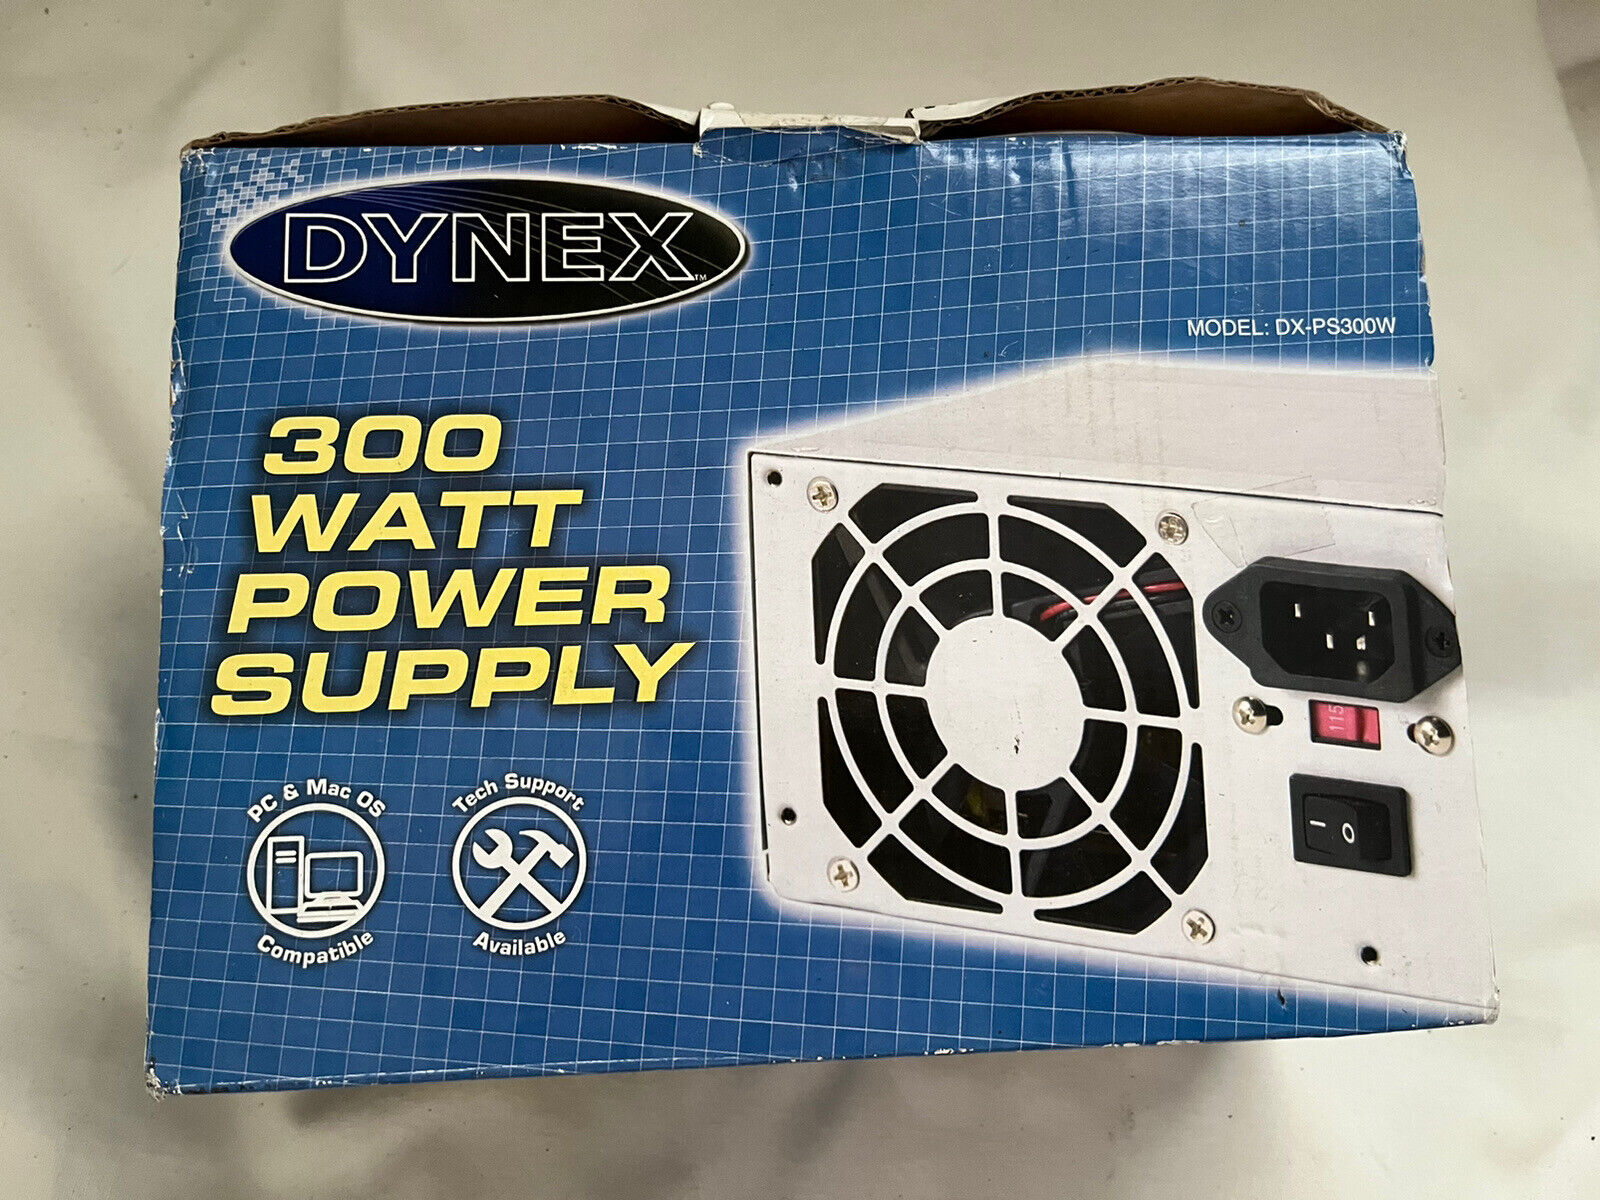 Dynex 300 Watt Power Supply DX-PS300W NIB